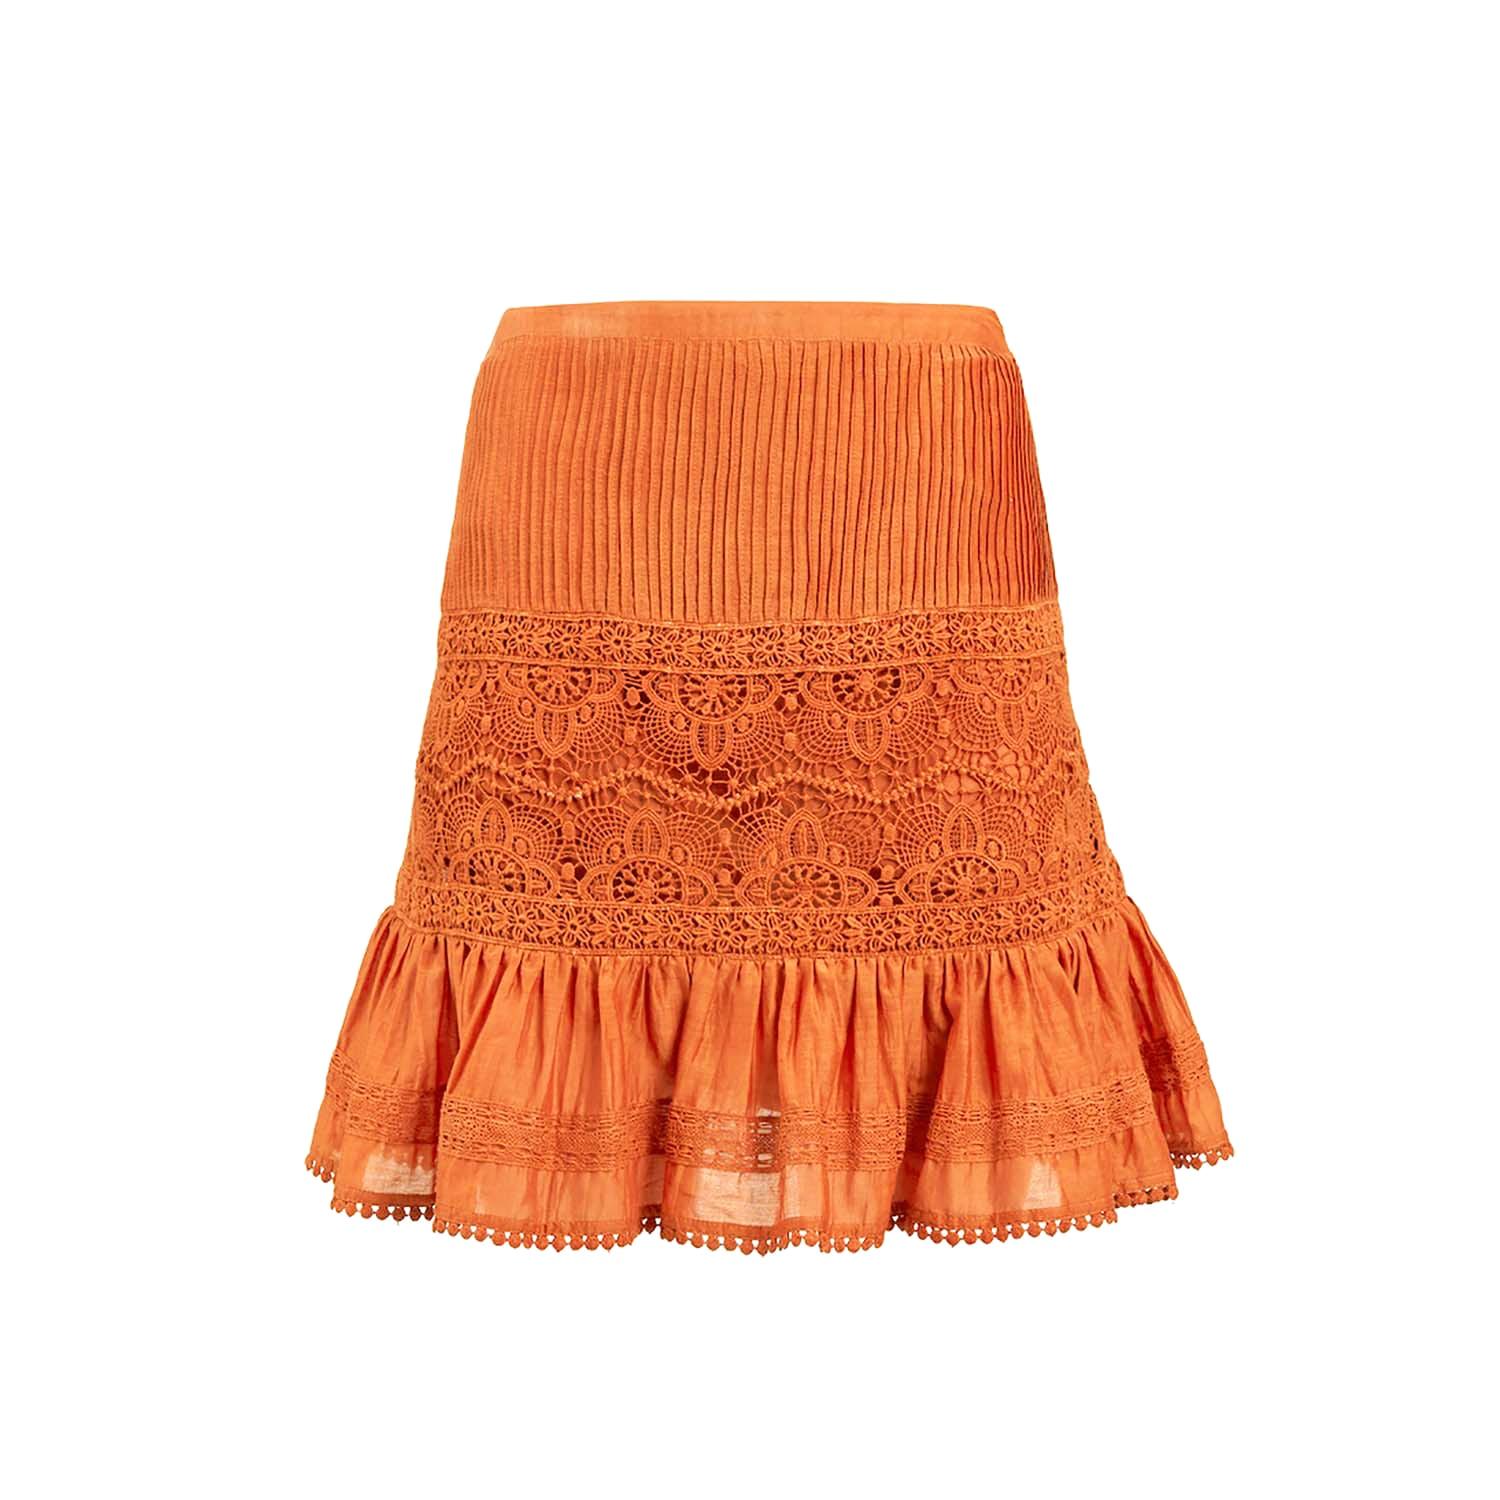 SECRET MISSION La Perla Skirt in Orange